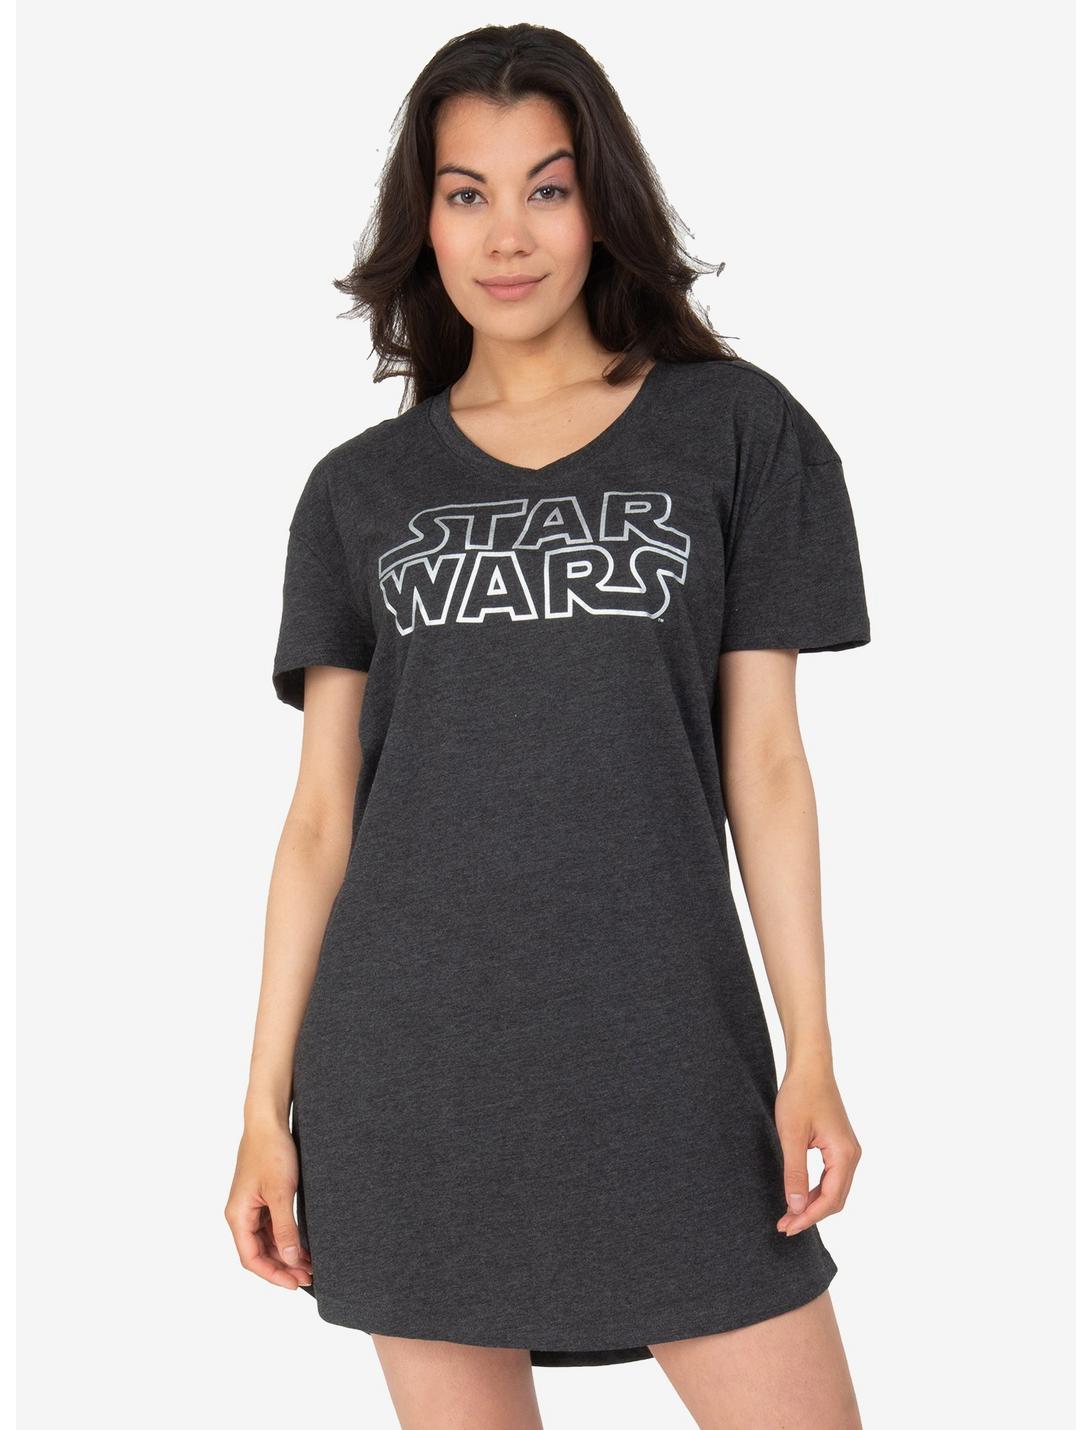 Star Wars Scoop Neck Night Shirt, BLACK, hi-res